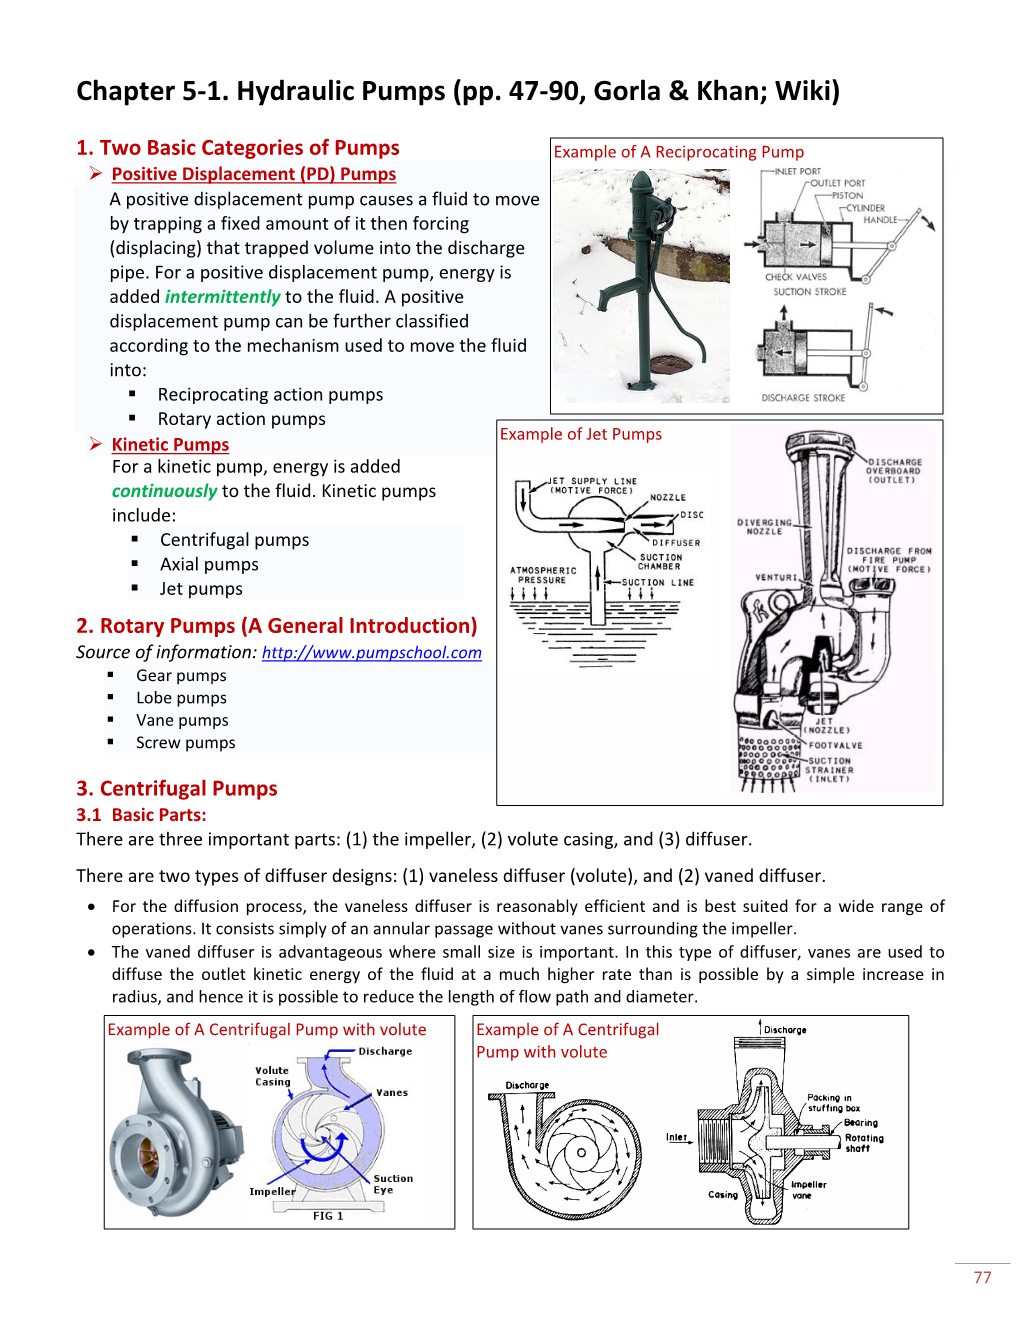 Chapter 5-1. Hydraulic Pumps (Pp. 47-90, Gorla & Khan; Wiki)